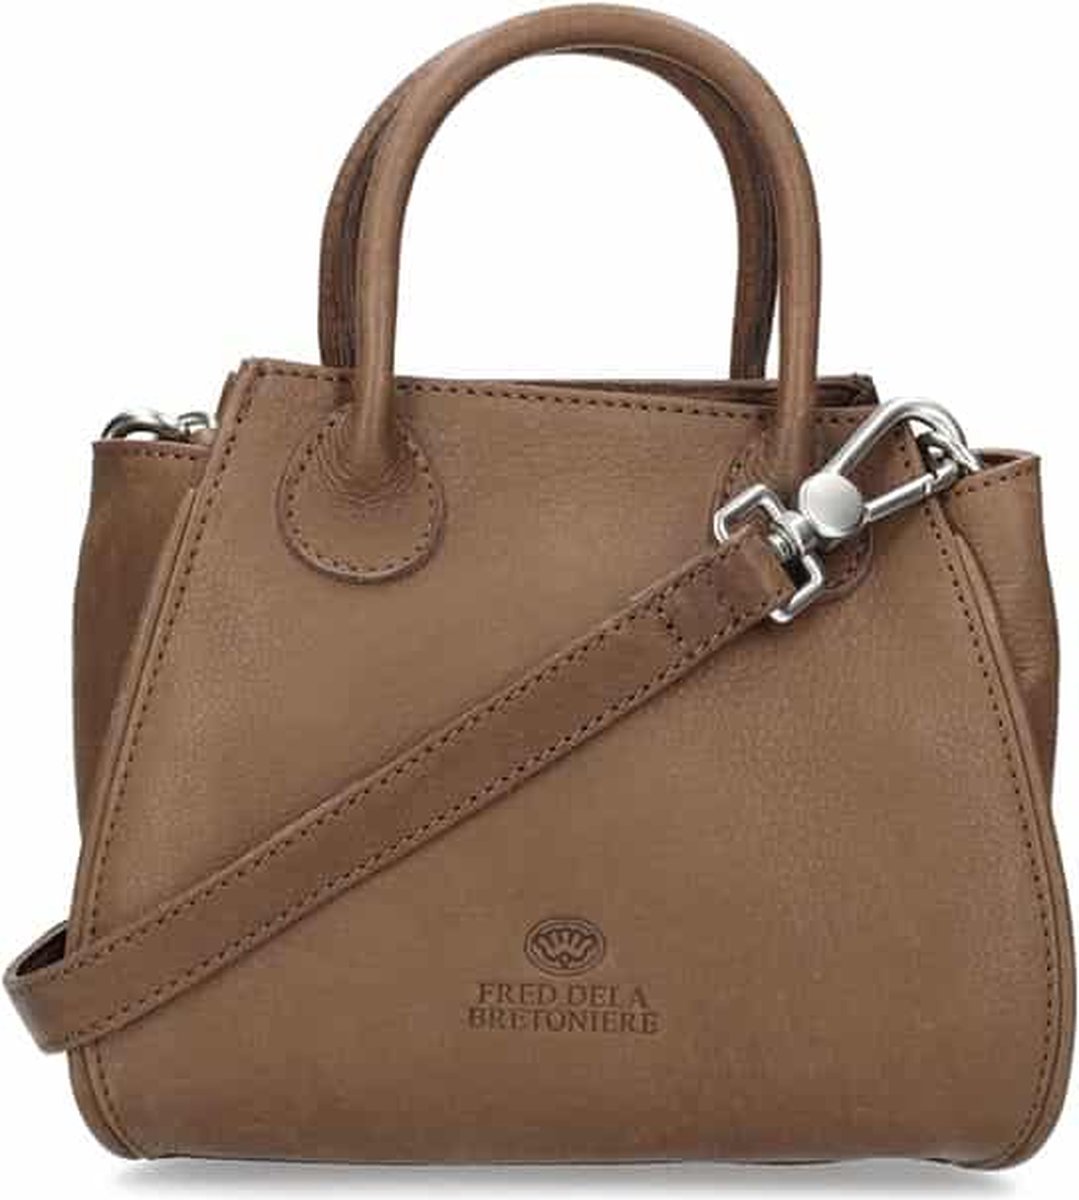 Fred de la Bretoniere Handbag Soft Grain Leather Brown